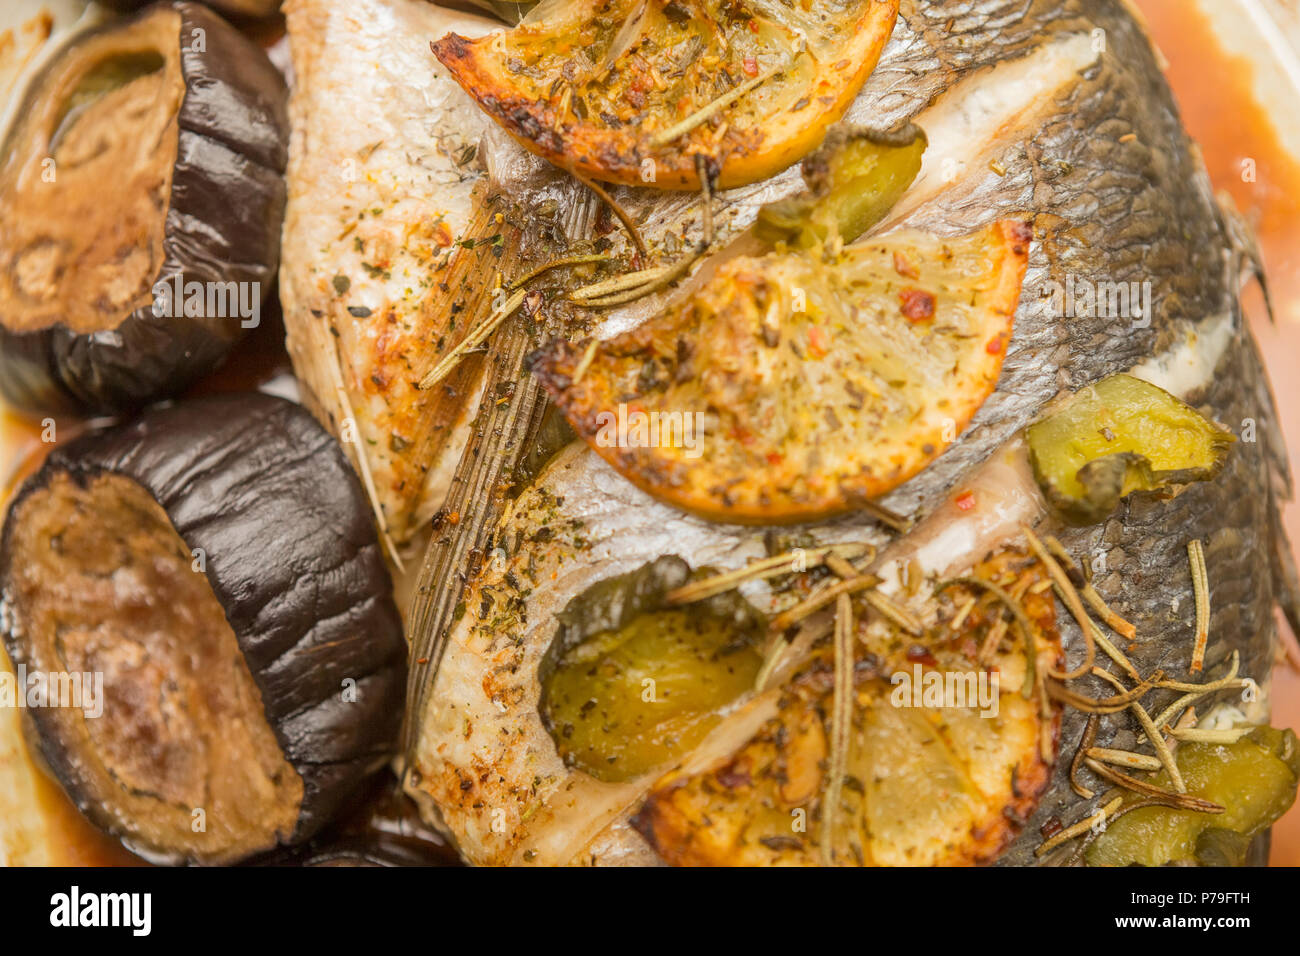 Baked dorado fish with lemon and eggplant. Stock Photo